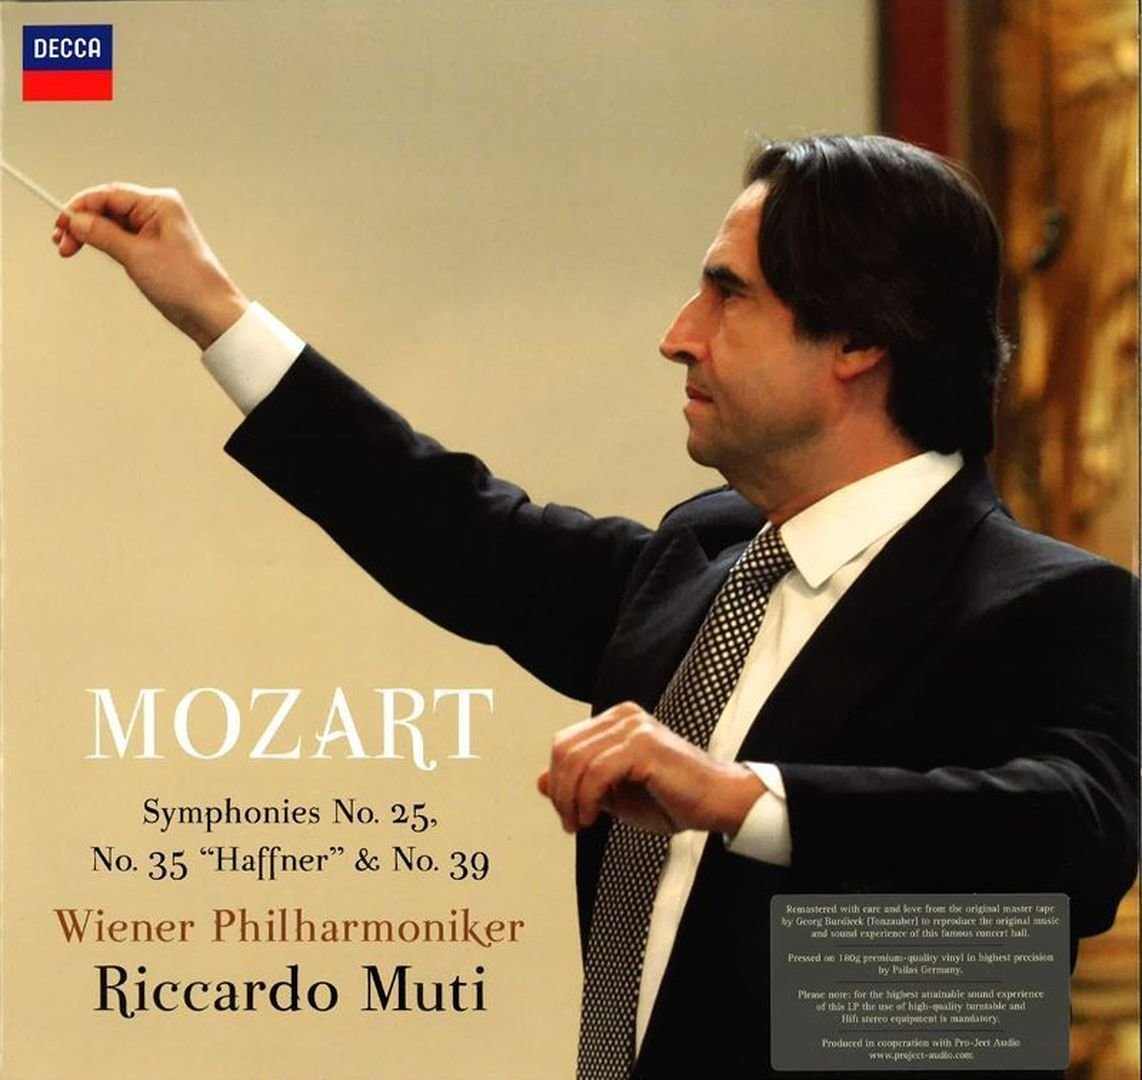 Vinylplade Riccardo Muti Mozart Symphonies Nr. 25, 35, 39 (2 LP)